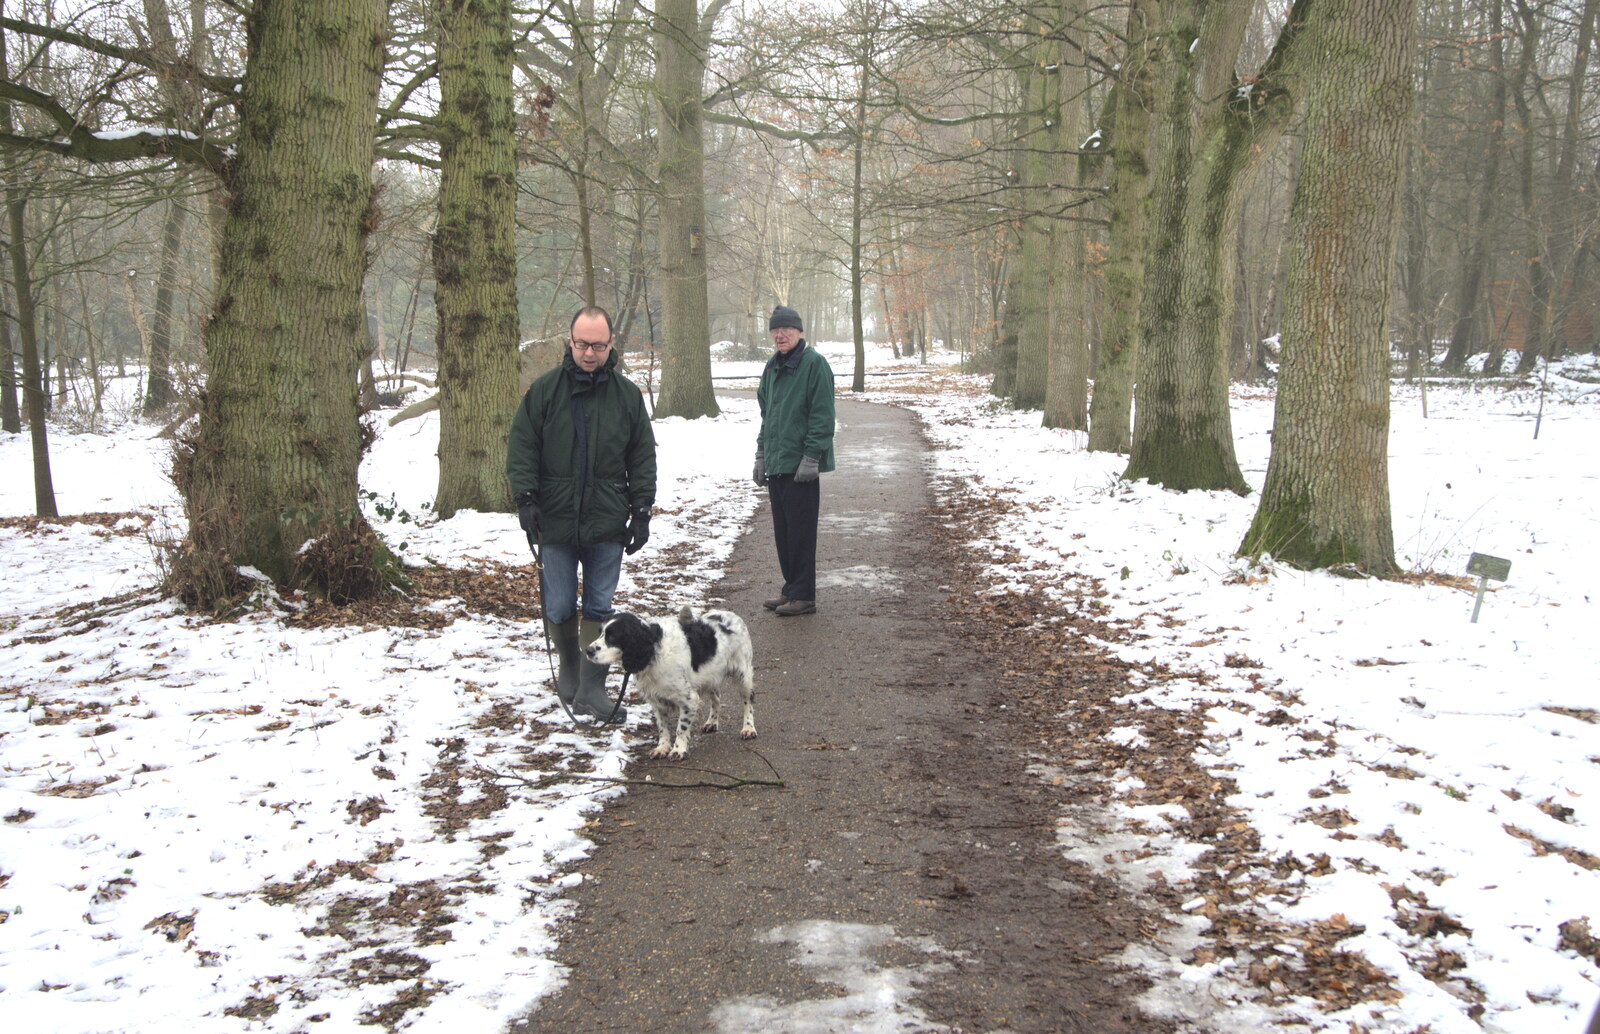 Matt, Alfie and Grandad from Winter Walks with Sis and Matt, Brome and Thornham, Suffolk - 11th February 2012